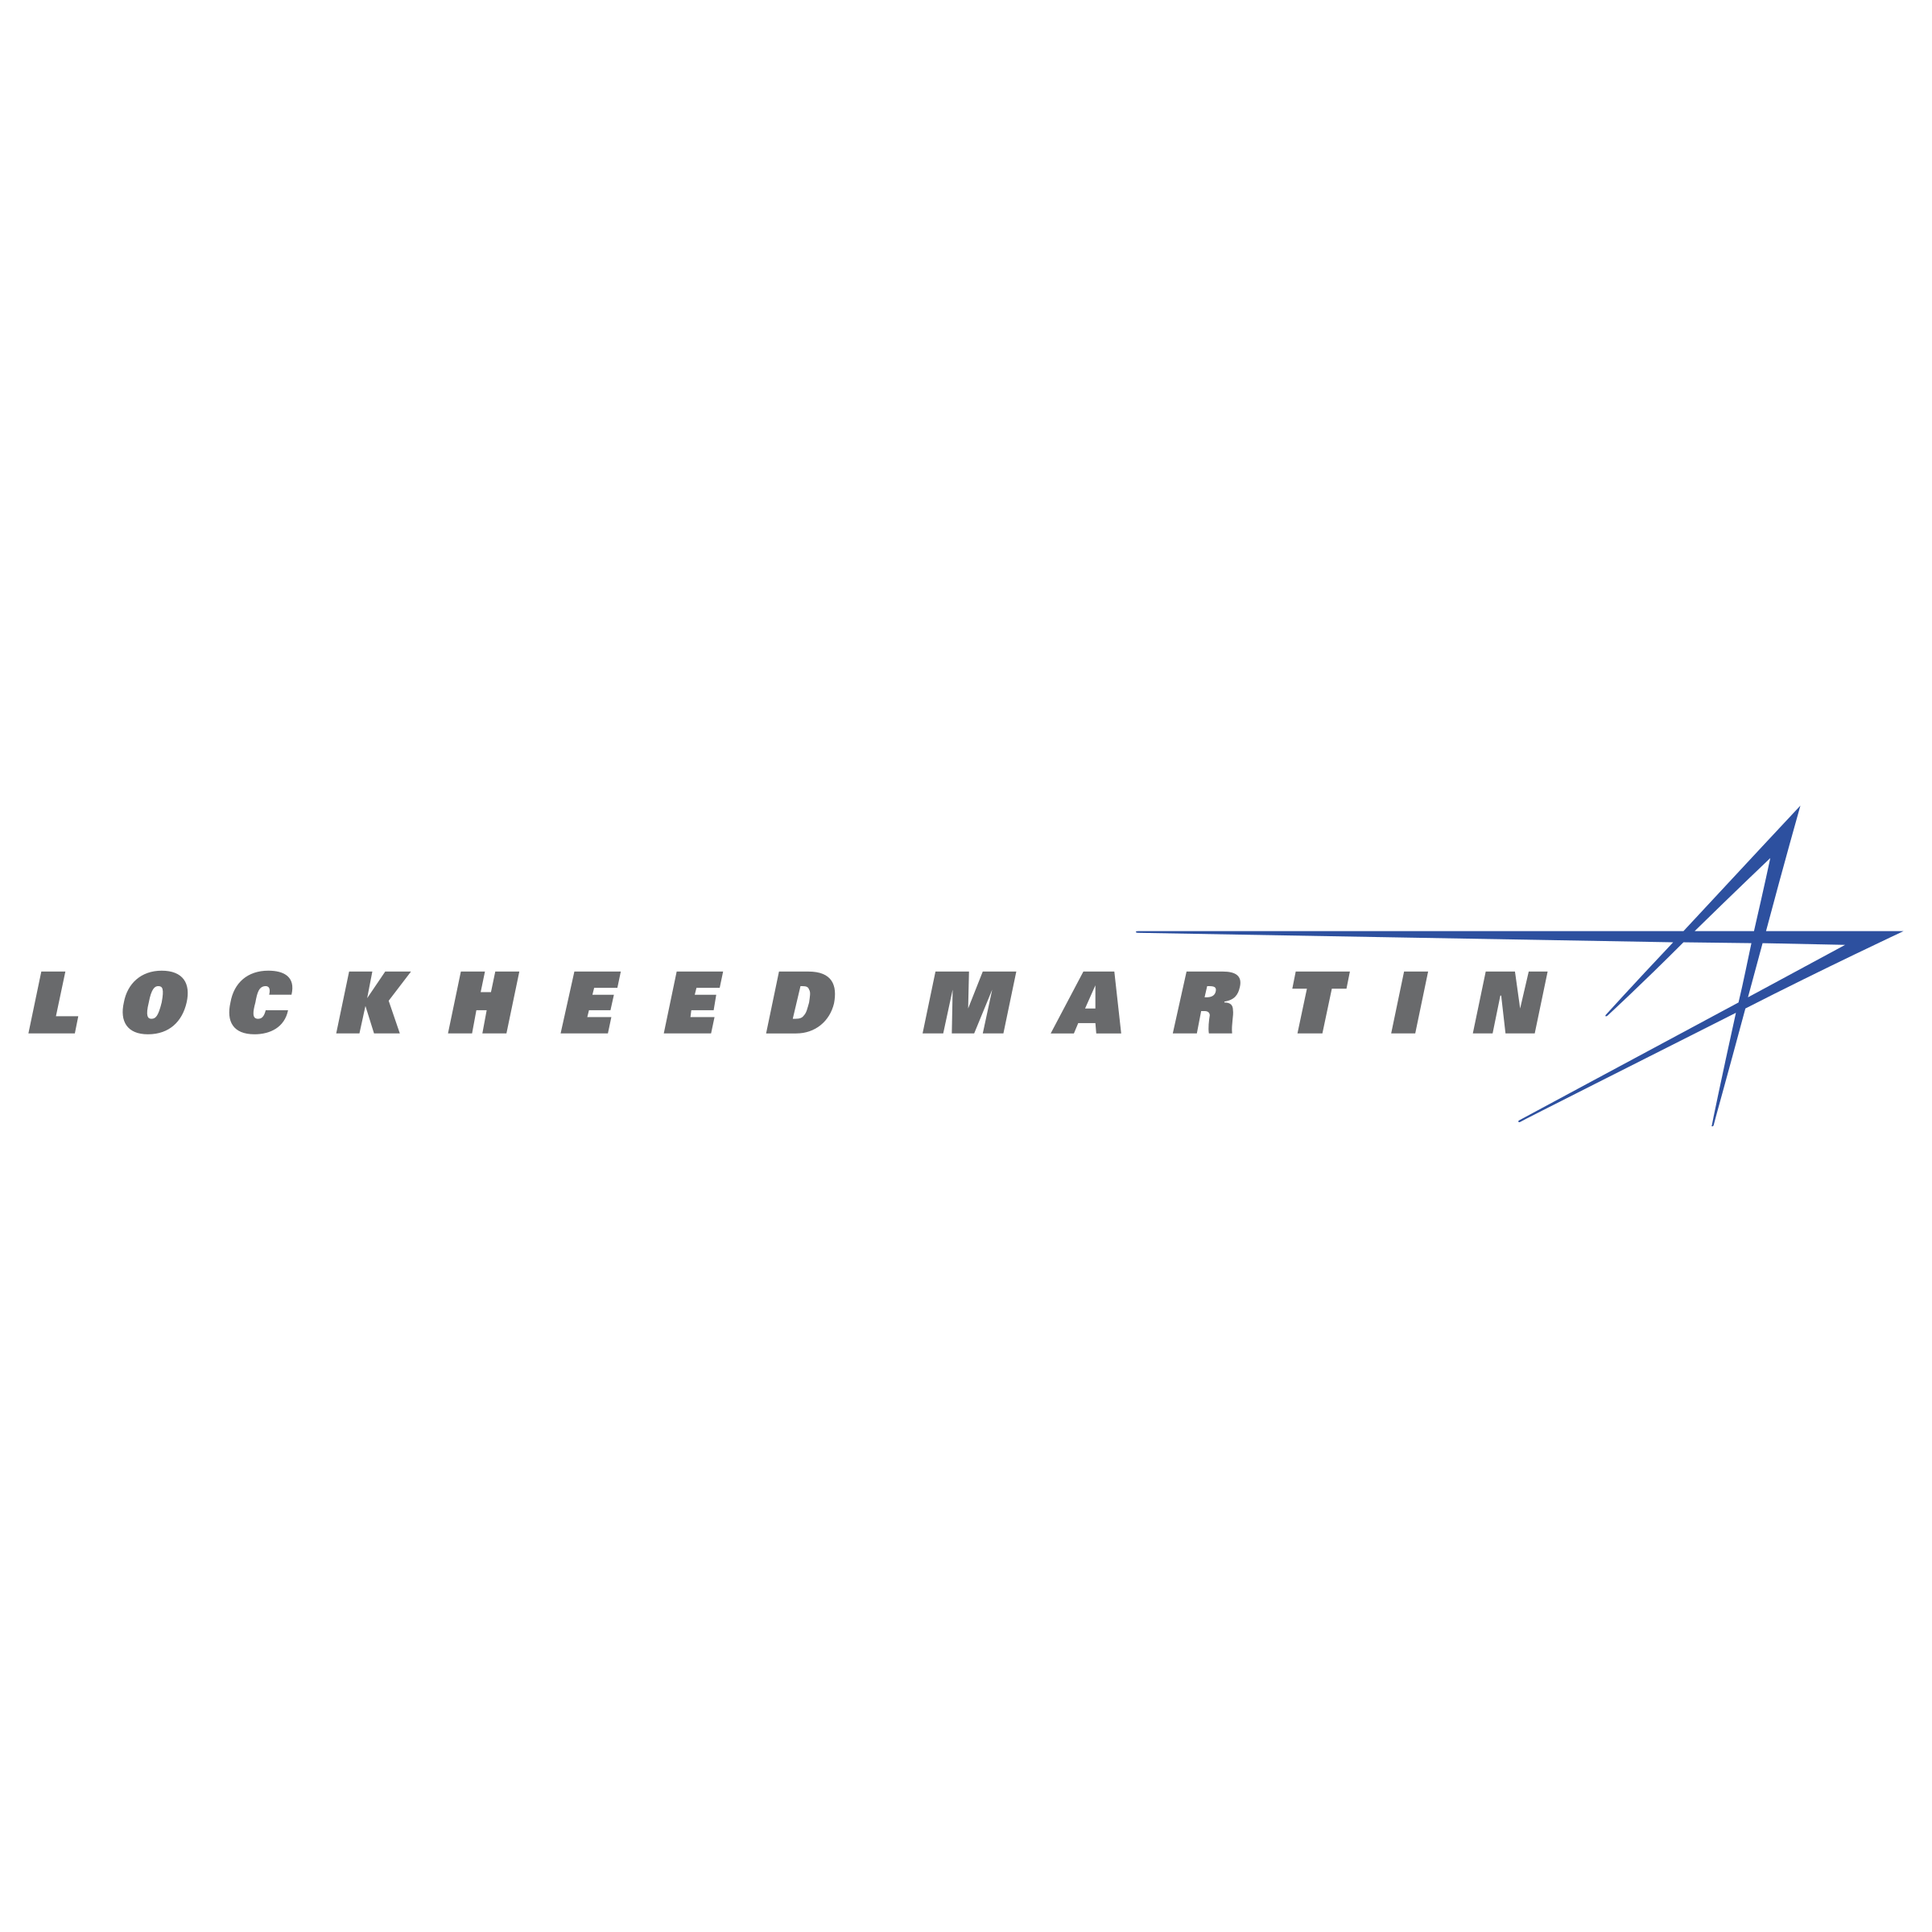 Lockheed Martin Logo - Lockheed Martin Logo PNG Transparent & SVG Vector - Freebie Supply